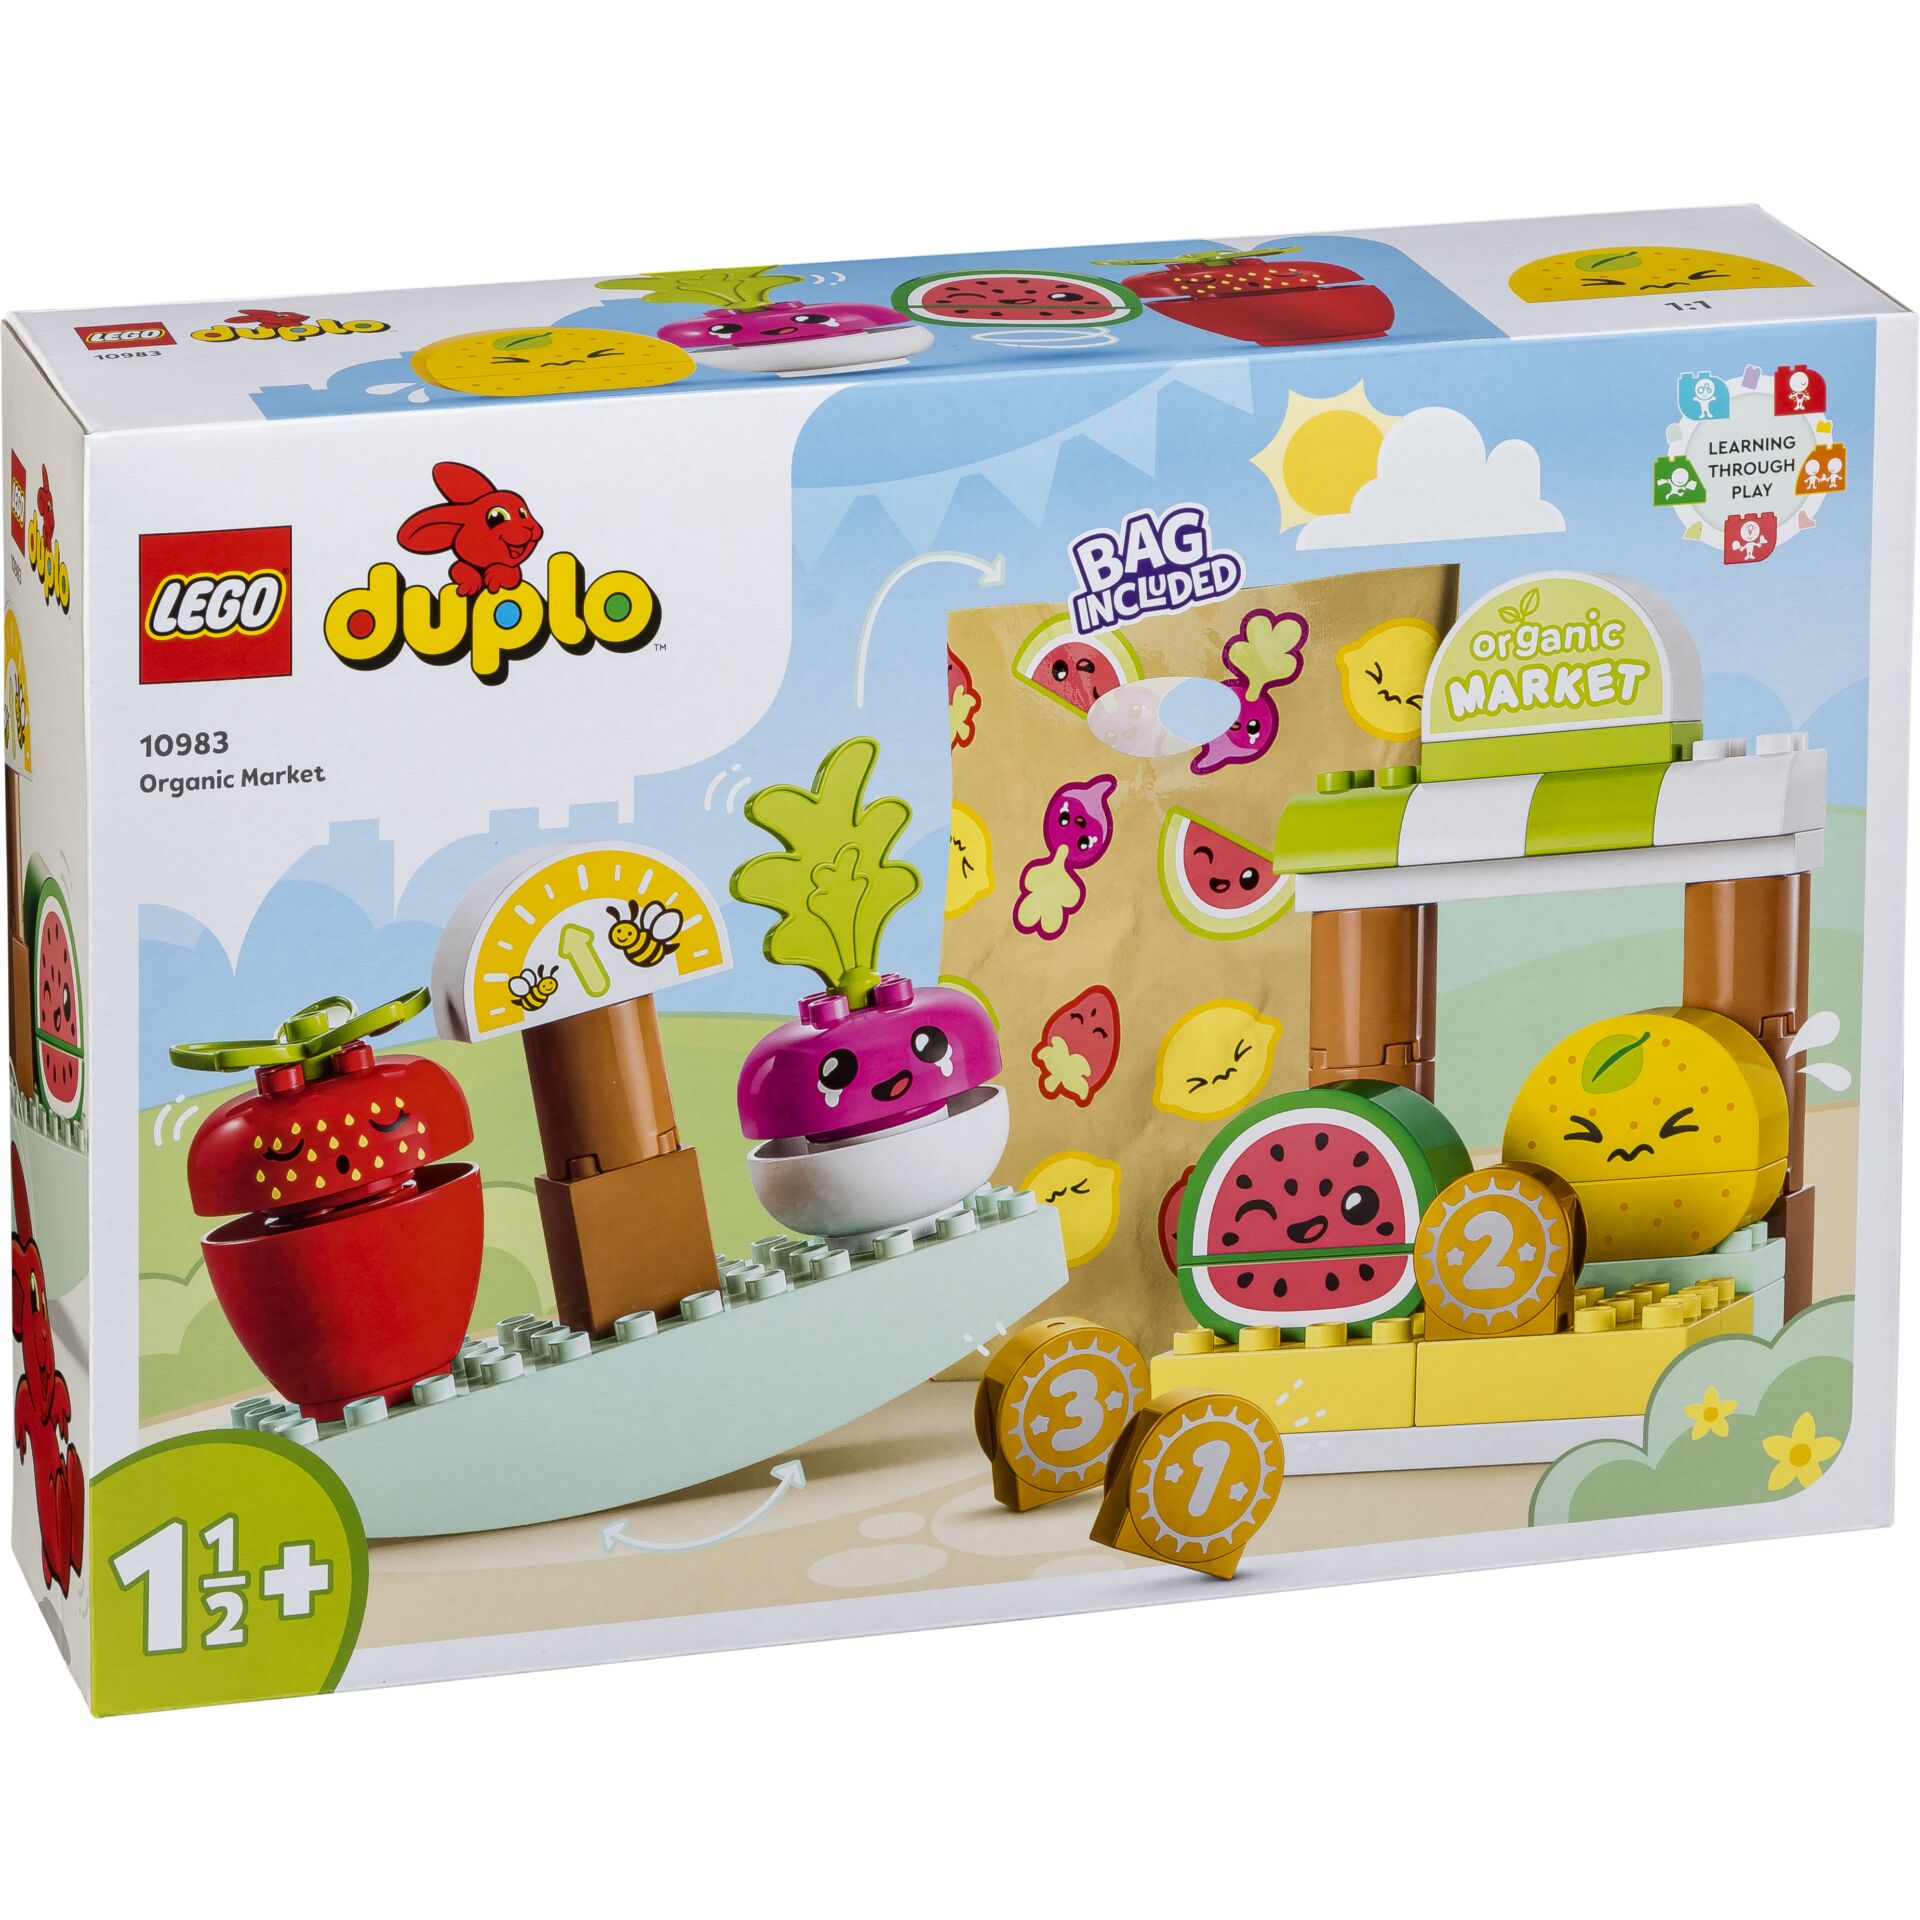 -Konstruktionsspielzeug 10983 Biomarkt Lego DUPLO -Lego Toys/Spielzeug